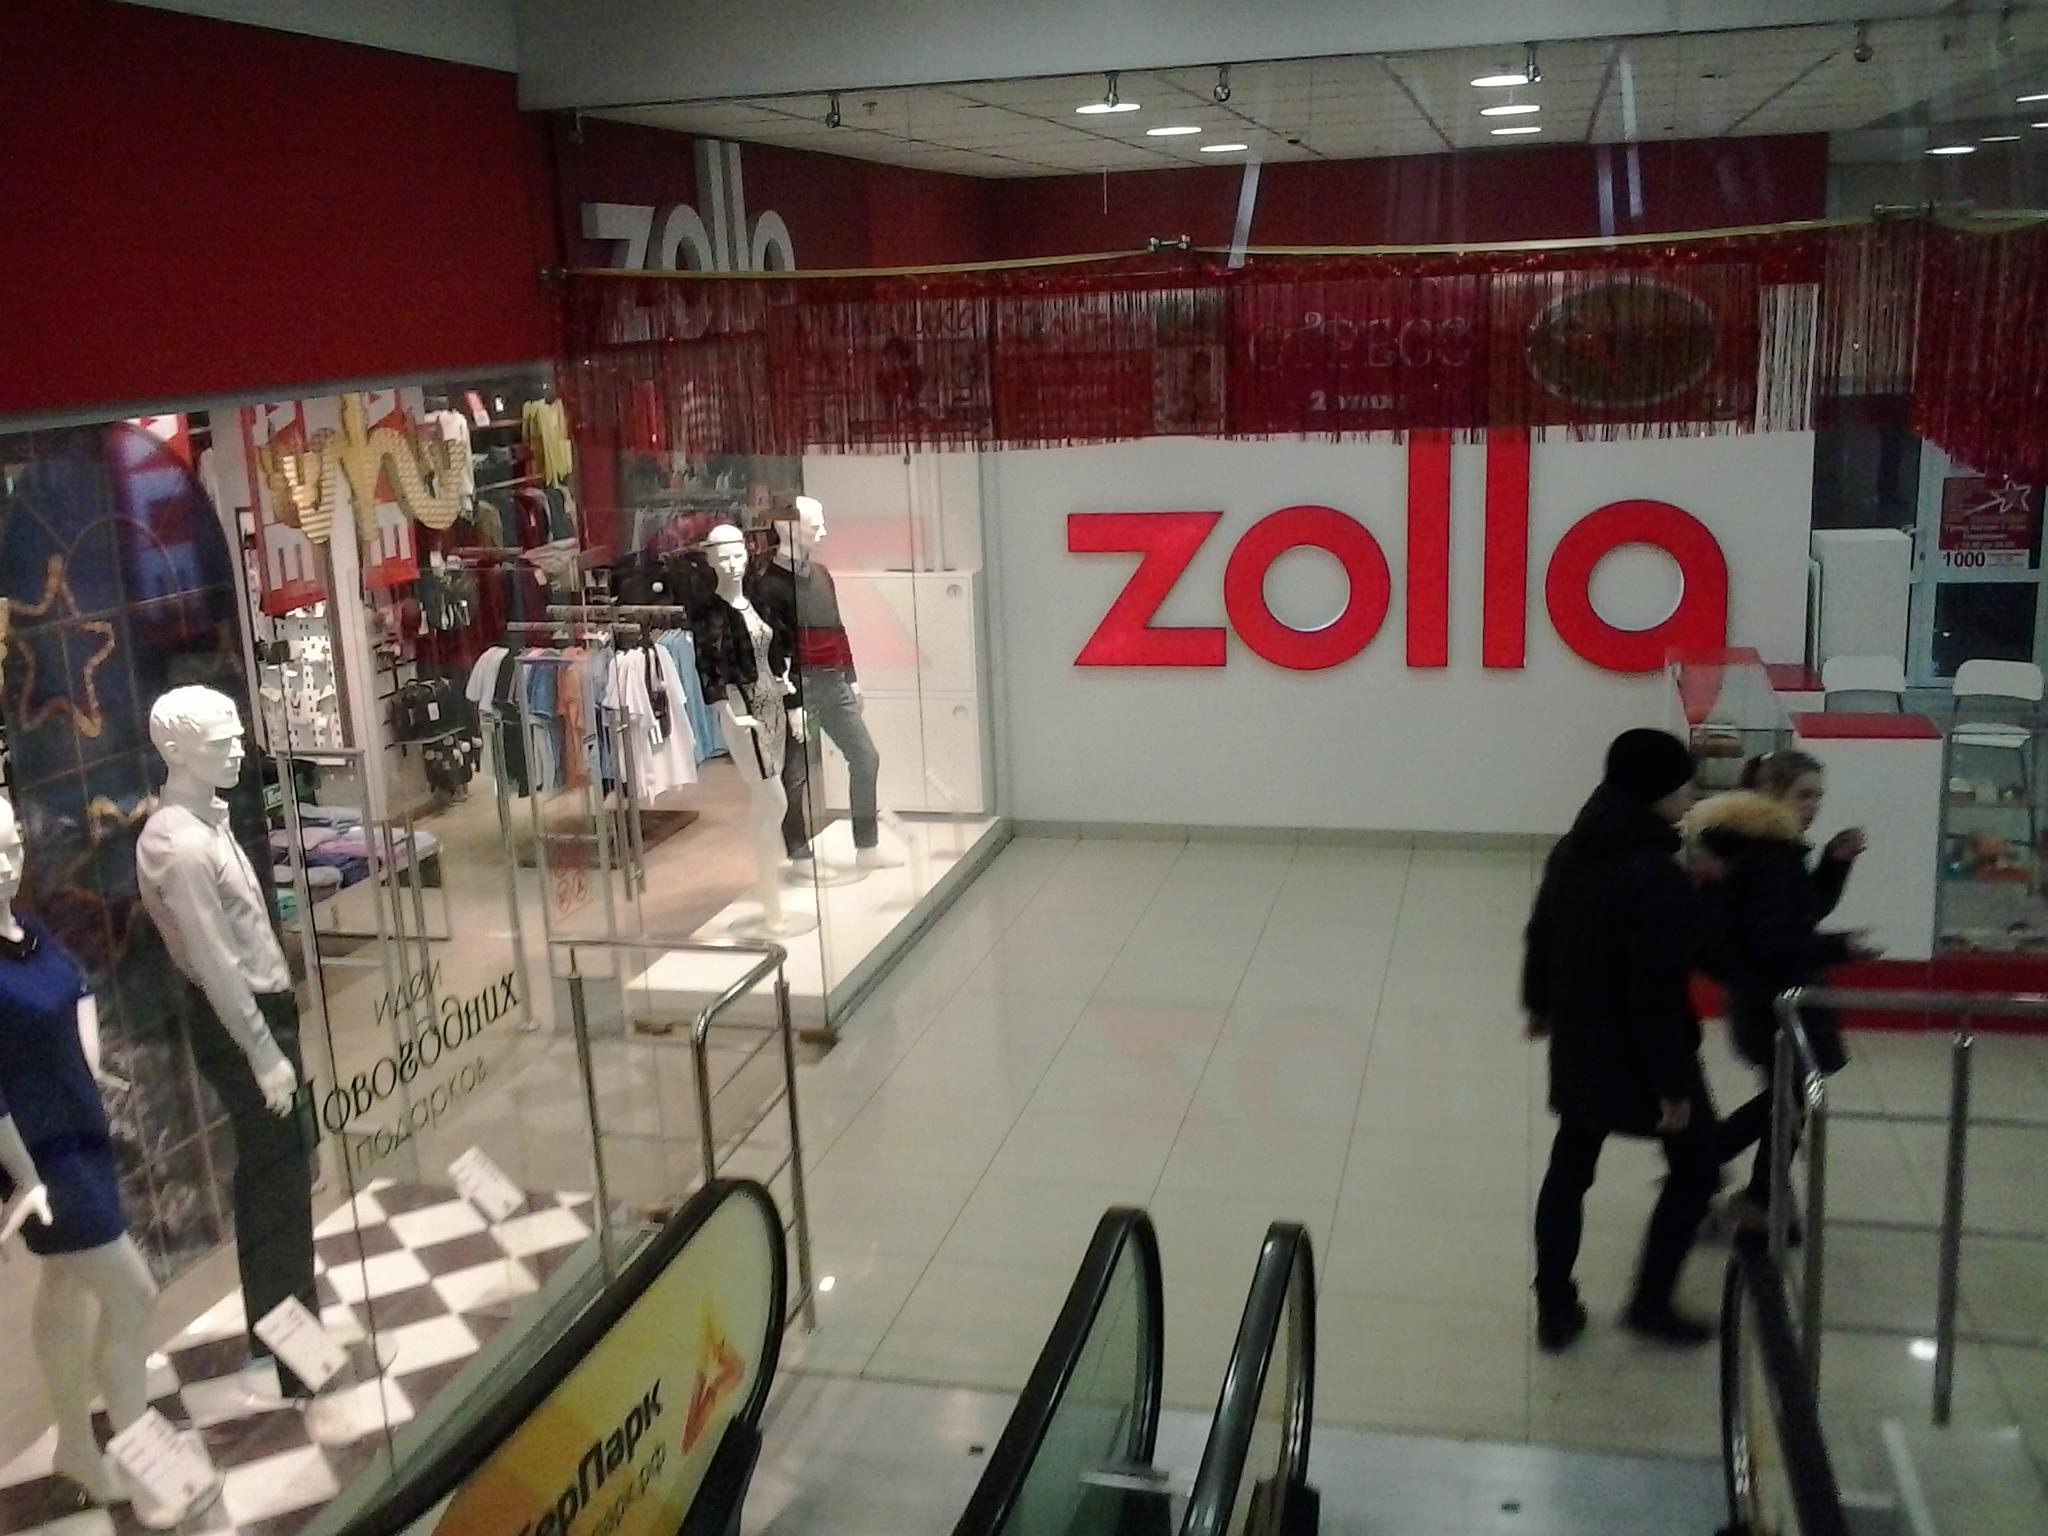 Zolla Интернет Магазин Калуга